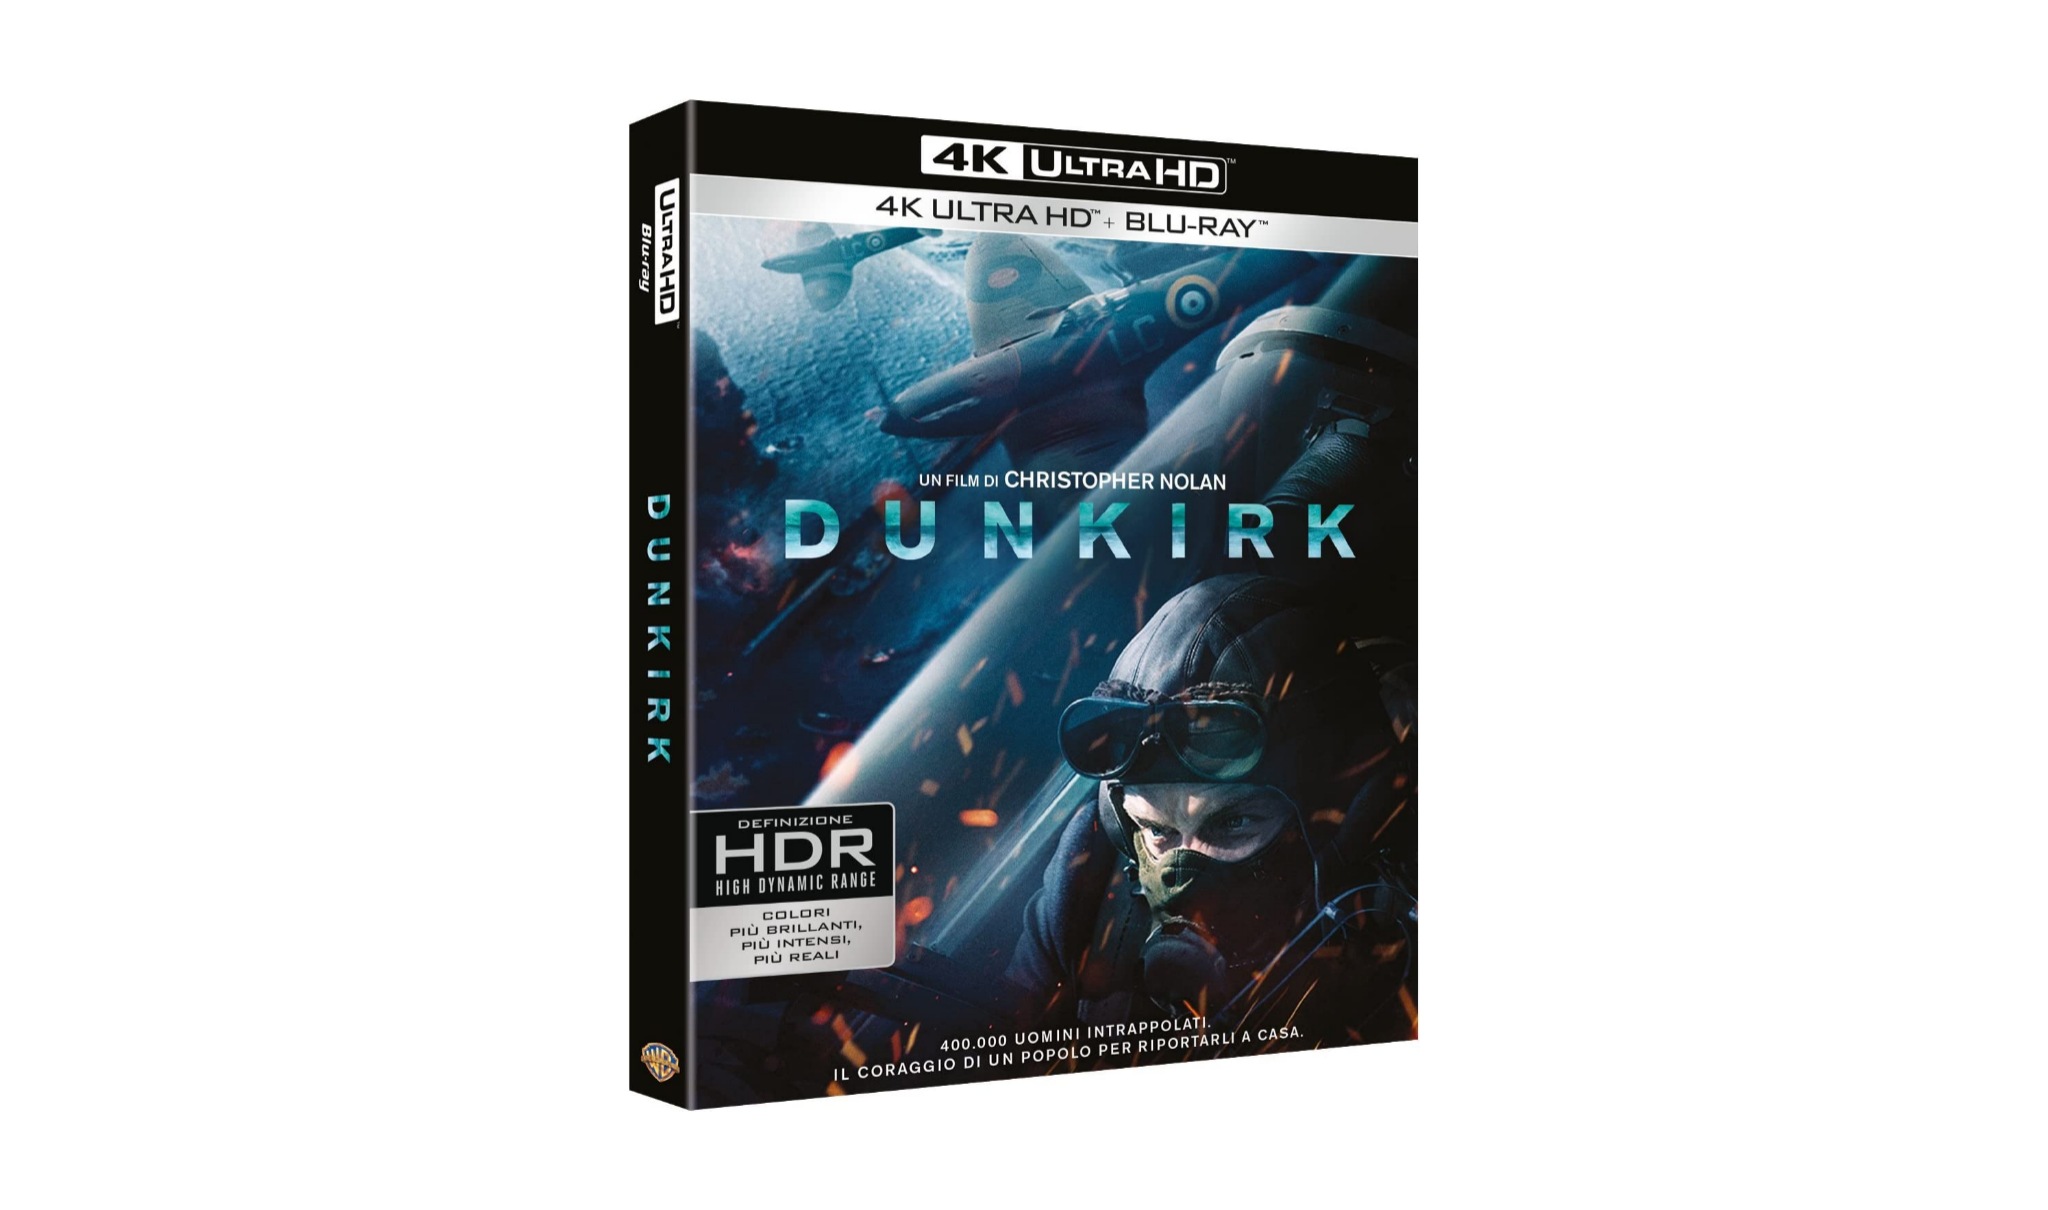 Dunkirk blu-ray